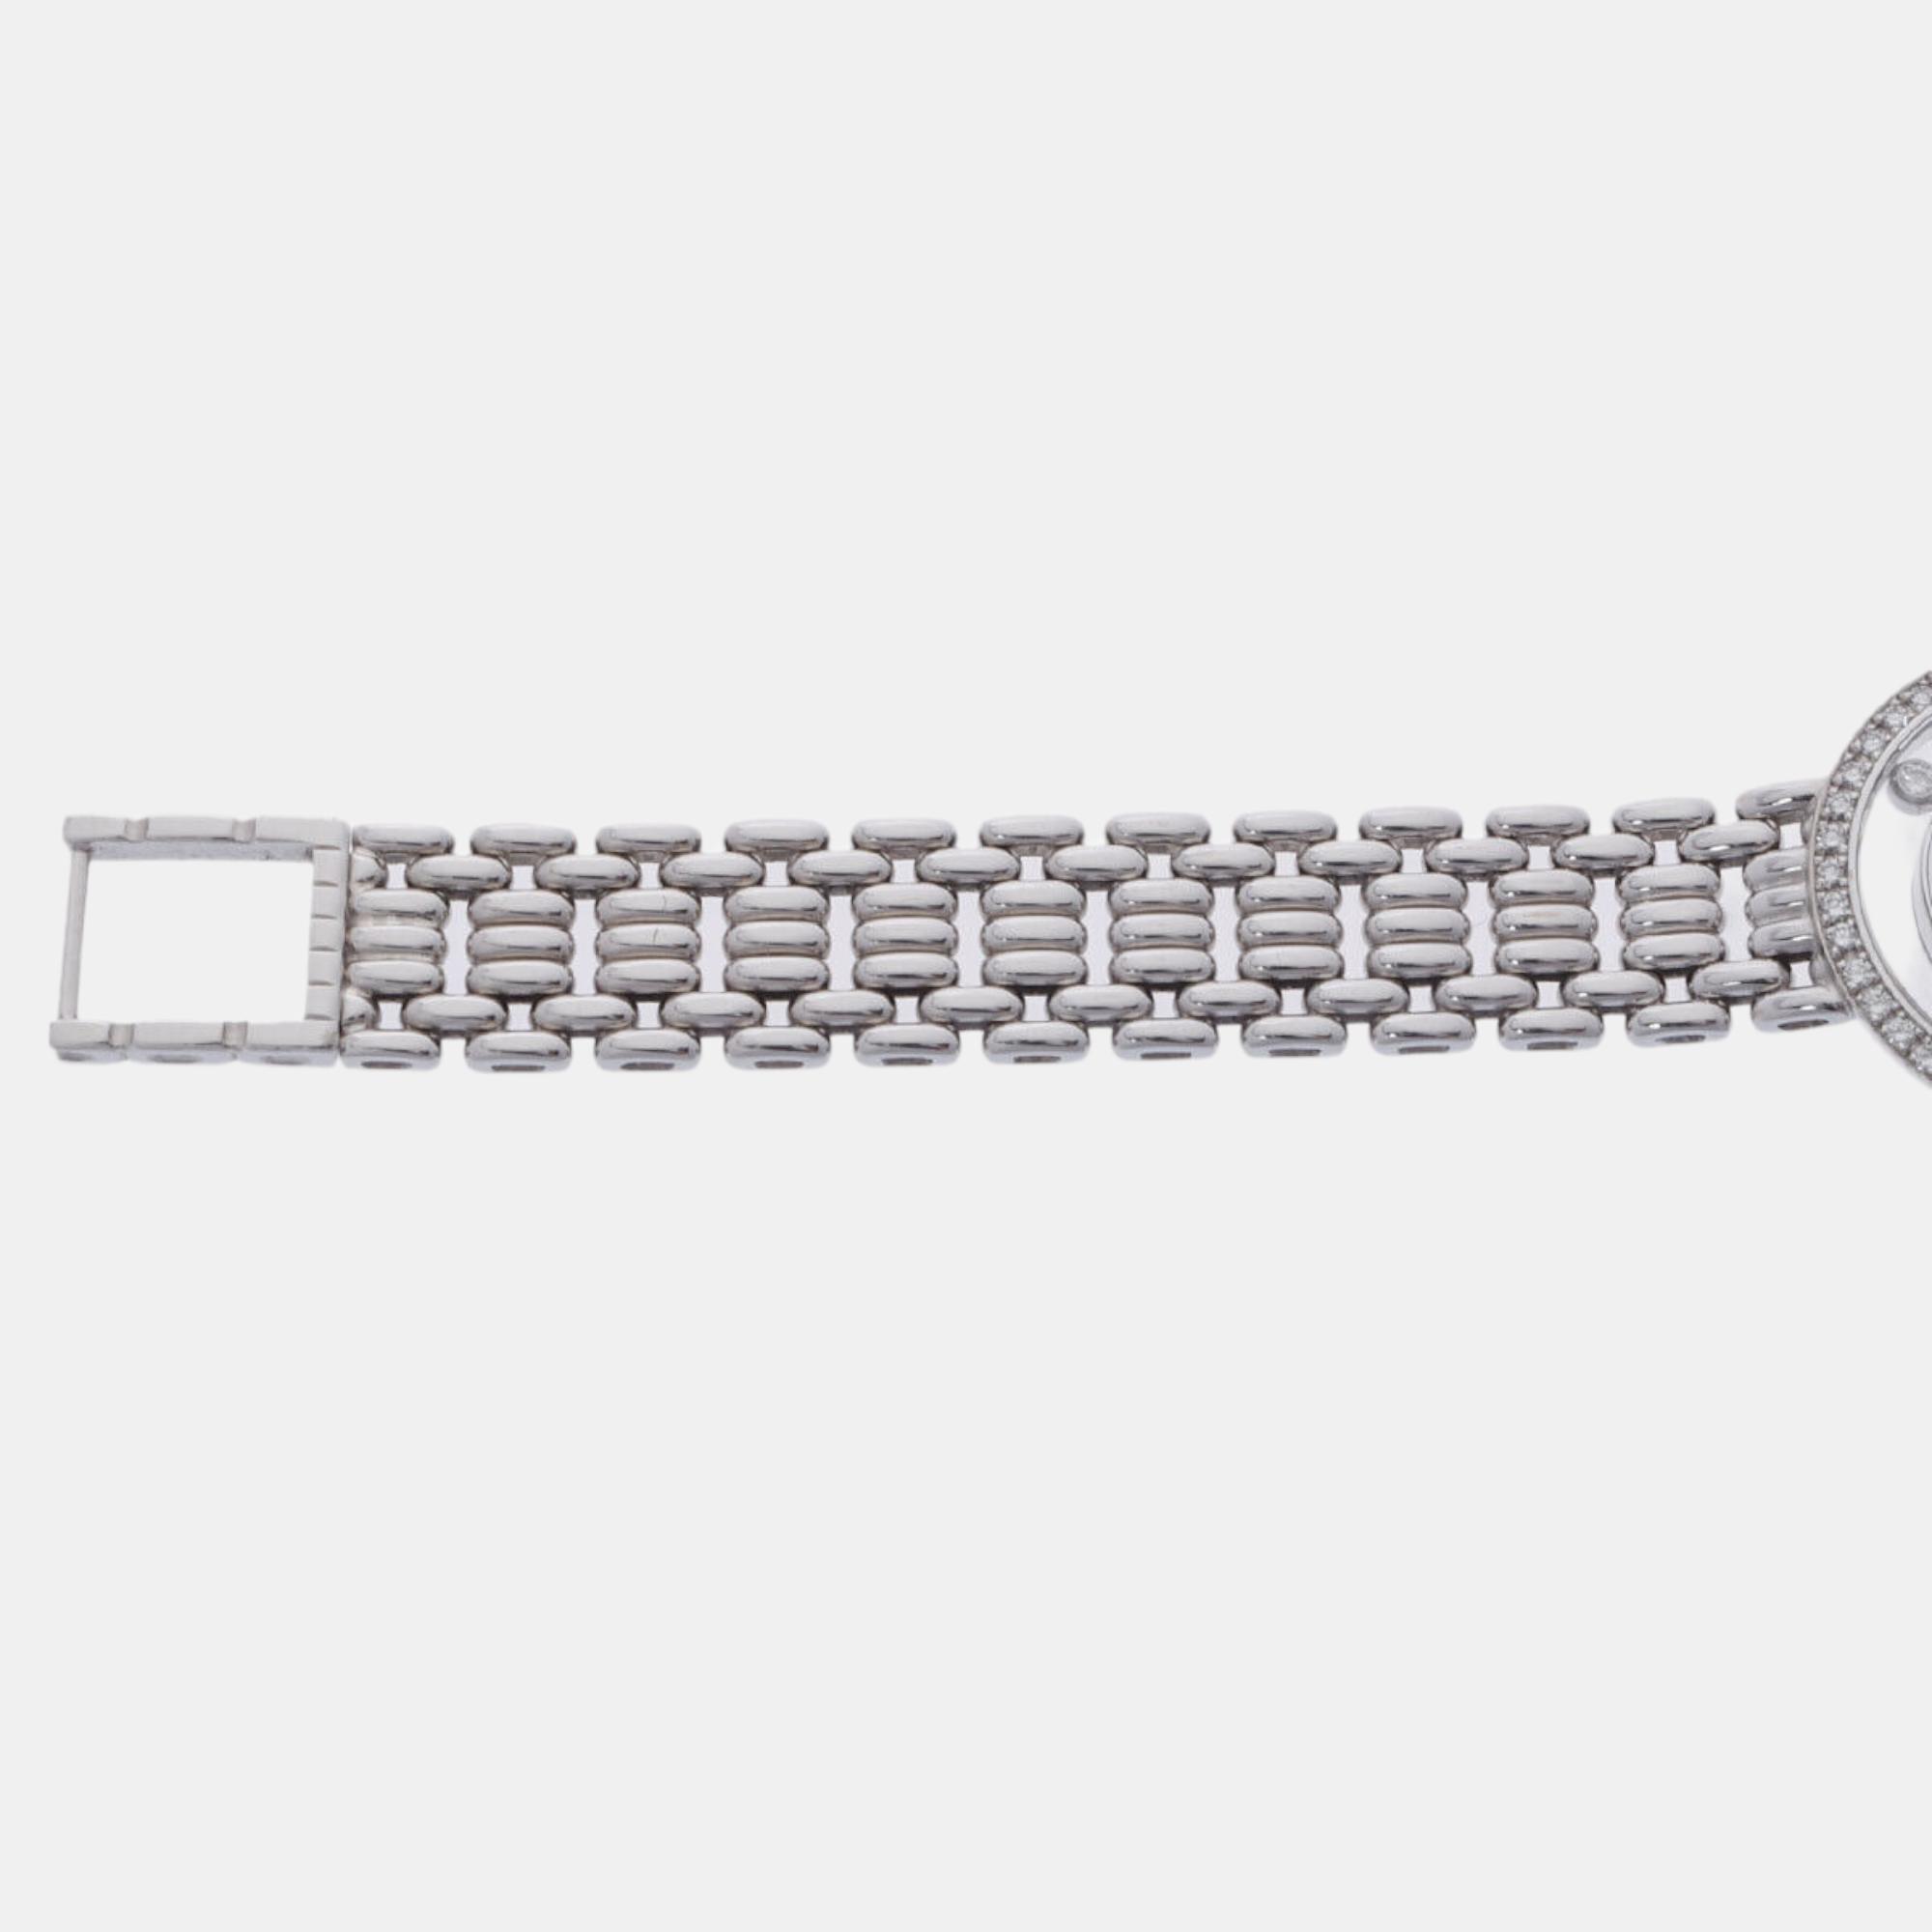 Chopard Silver Diamond 18k White Gold Happy Diamonds 20/6392 Quartz Women's Wristwatch 23 Mm